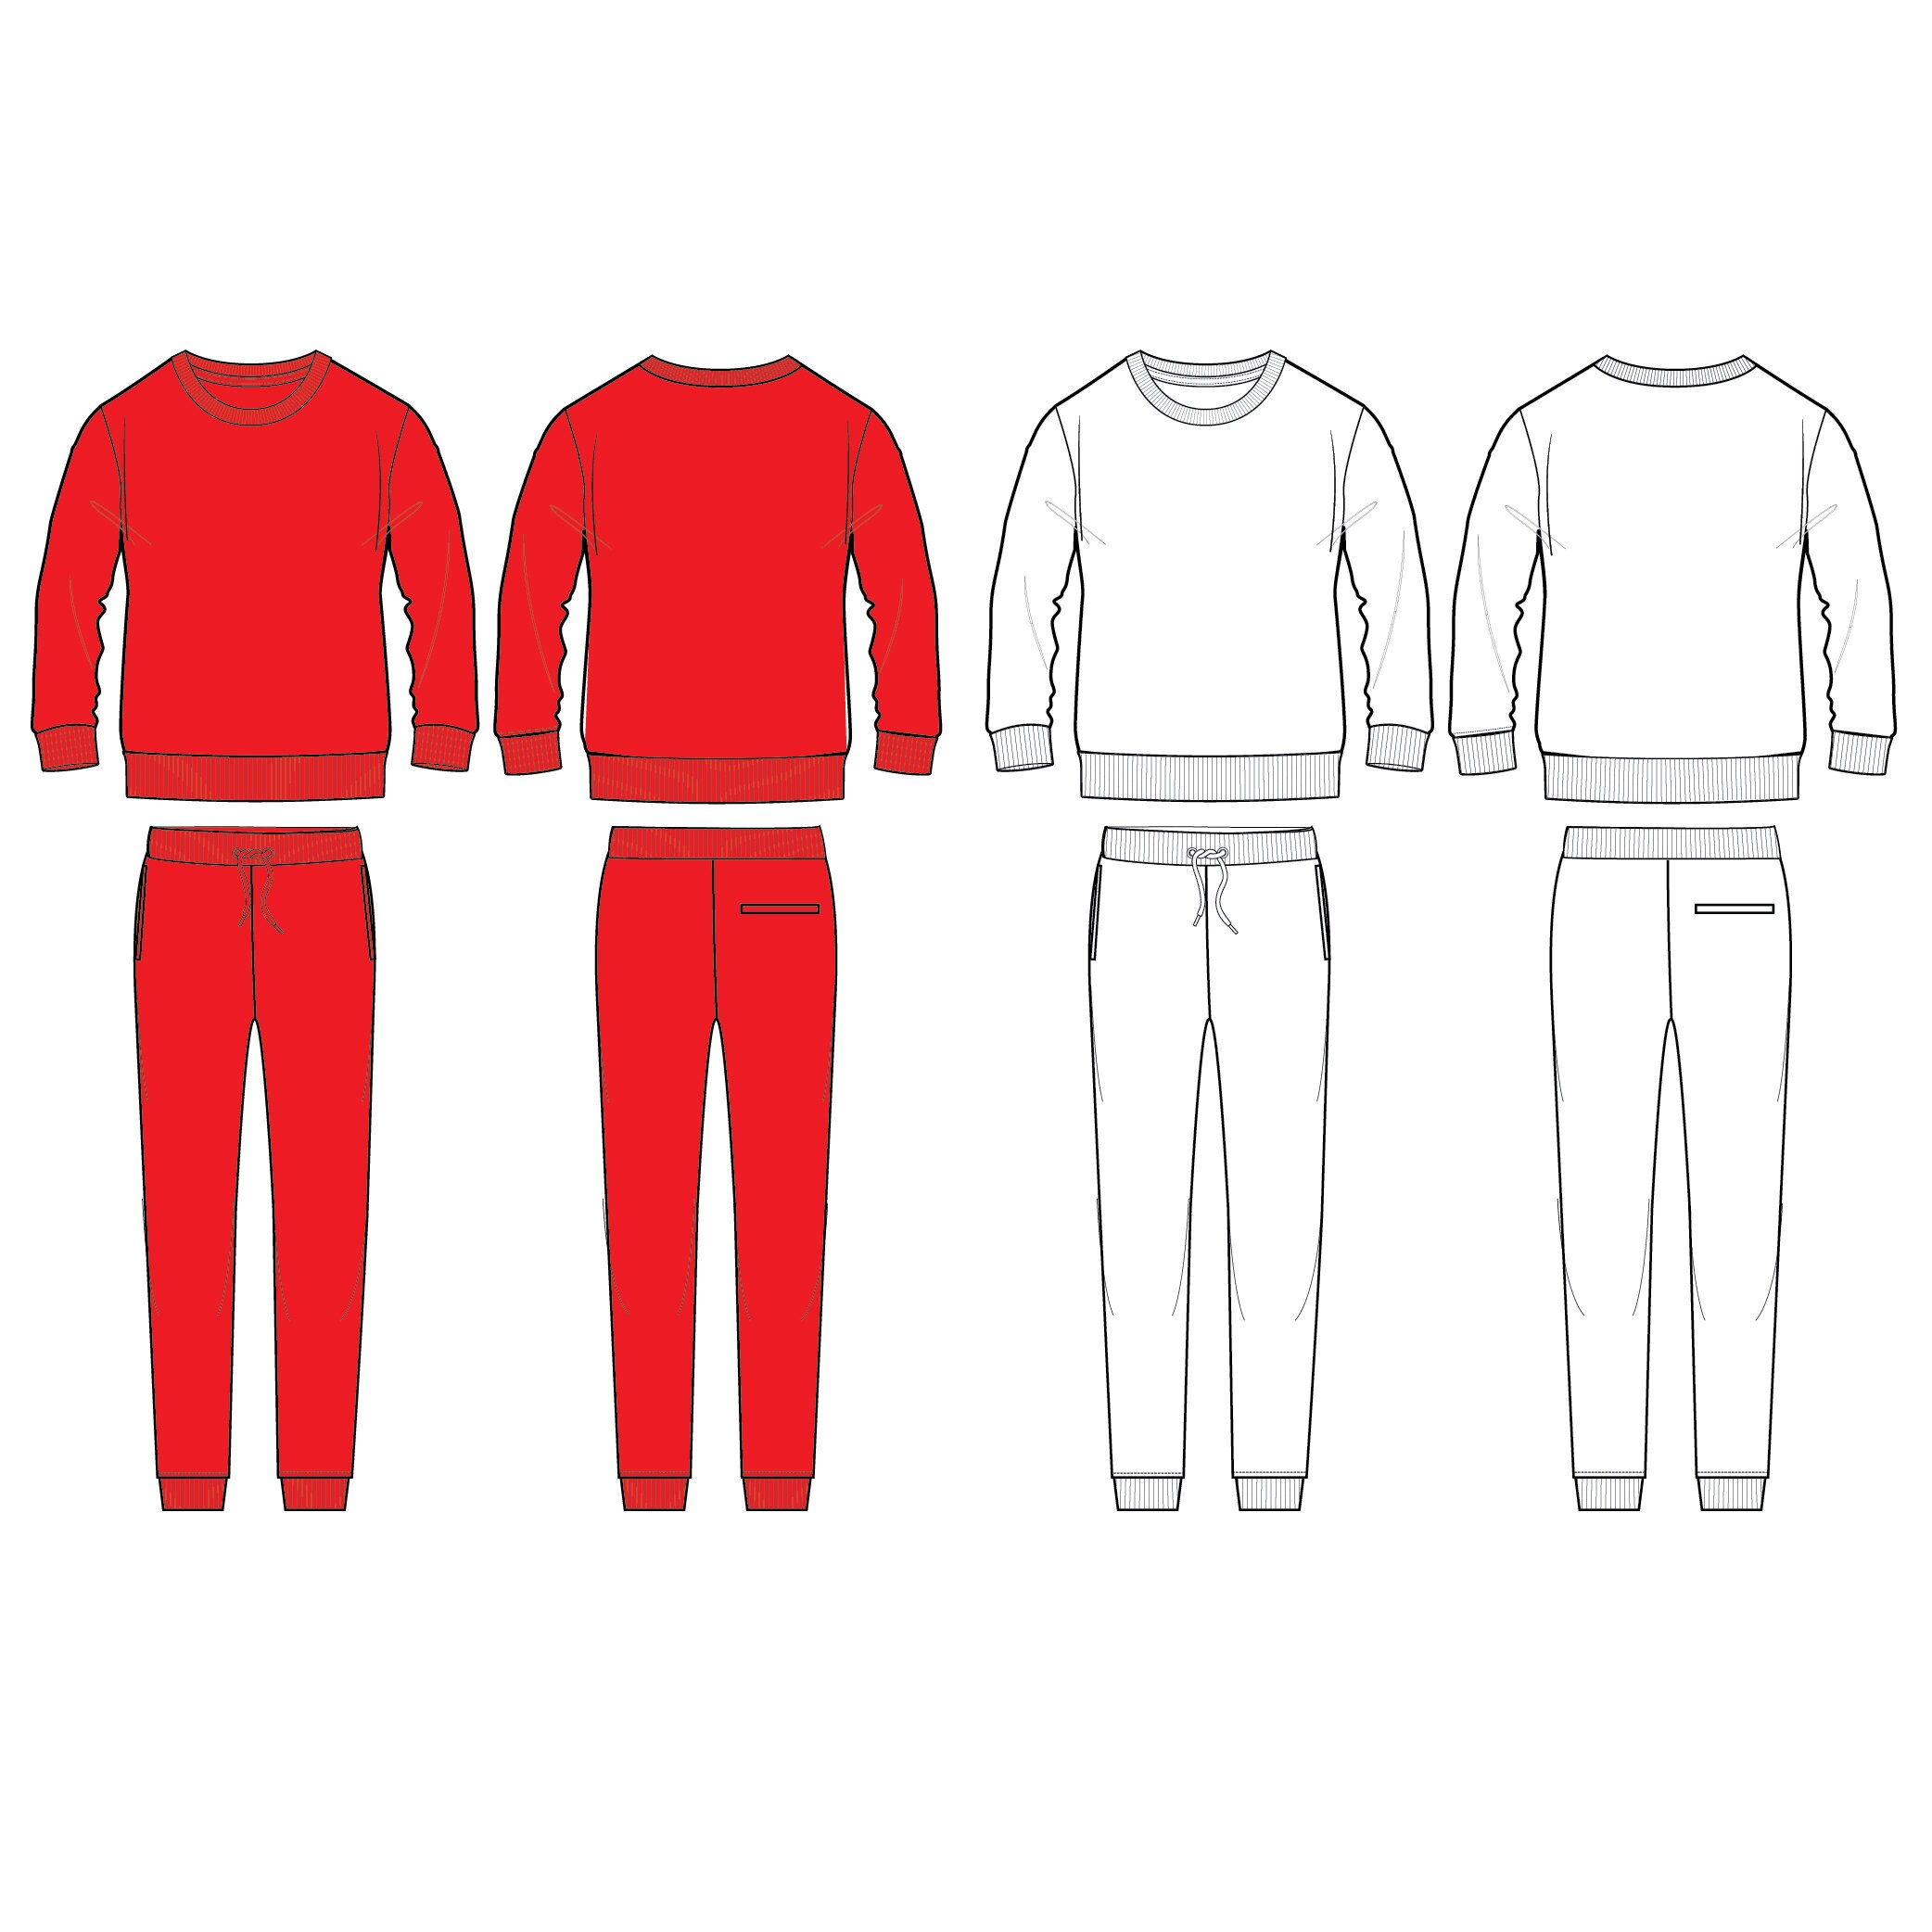 Sweatsuit Fashion Flat Templates / Technical Drawings / Fashion CAD ...